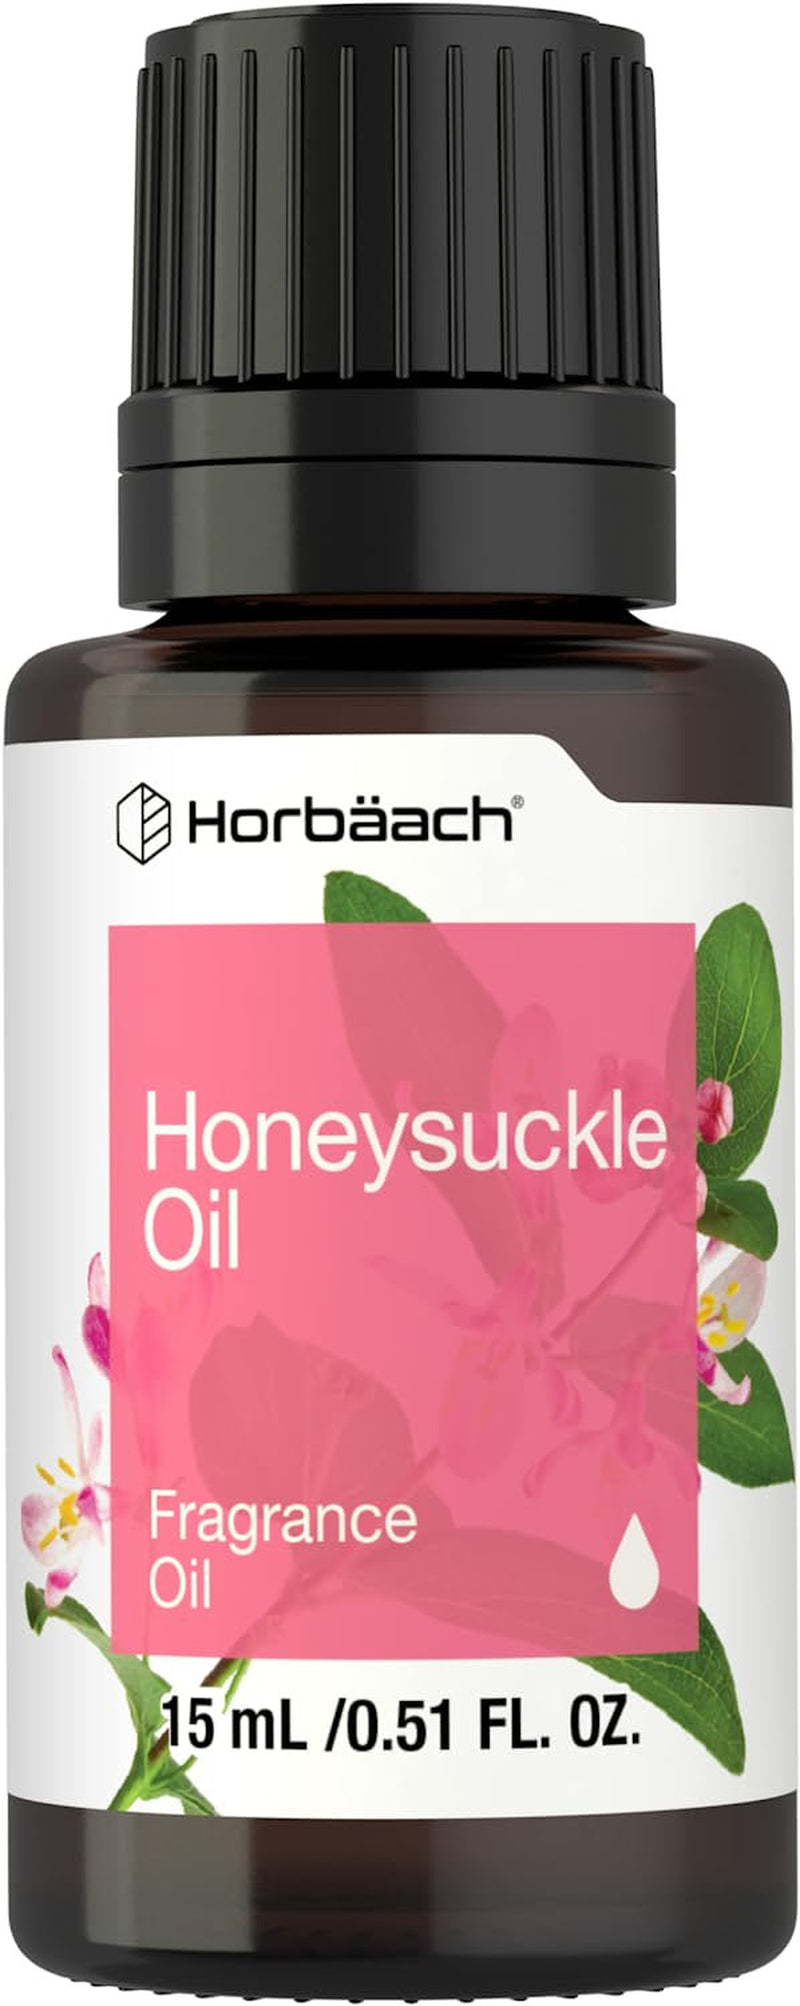 Honeysuckle Oil | 15 Ml | Fragrance Oil for Candles & Soap | by Horbaach